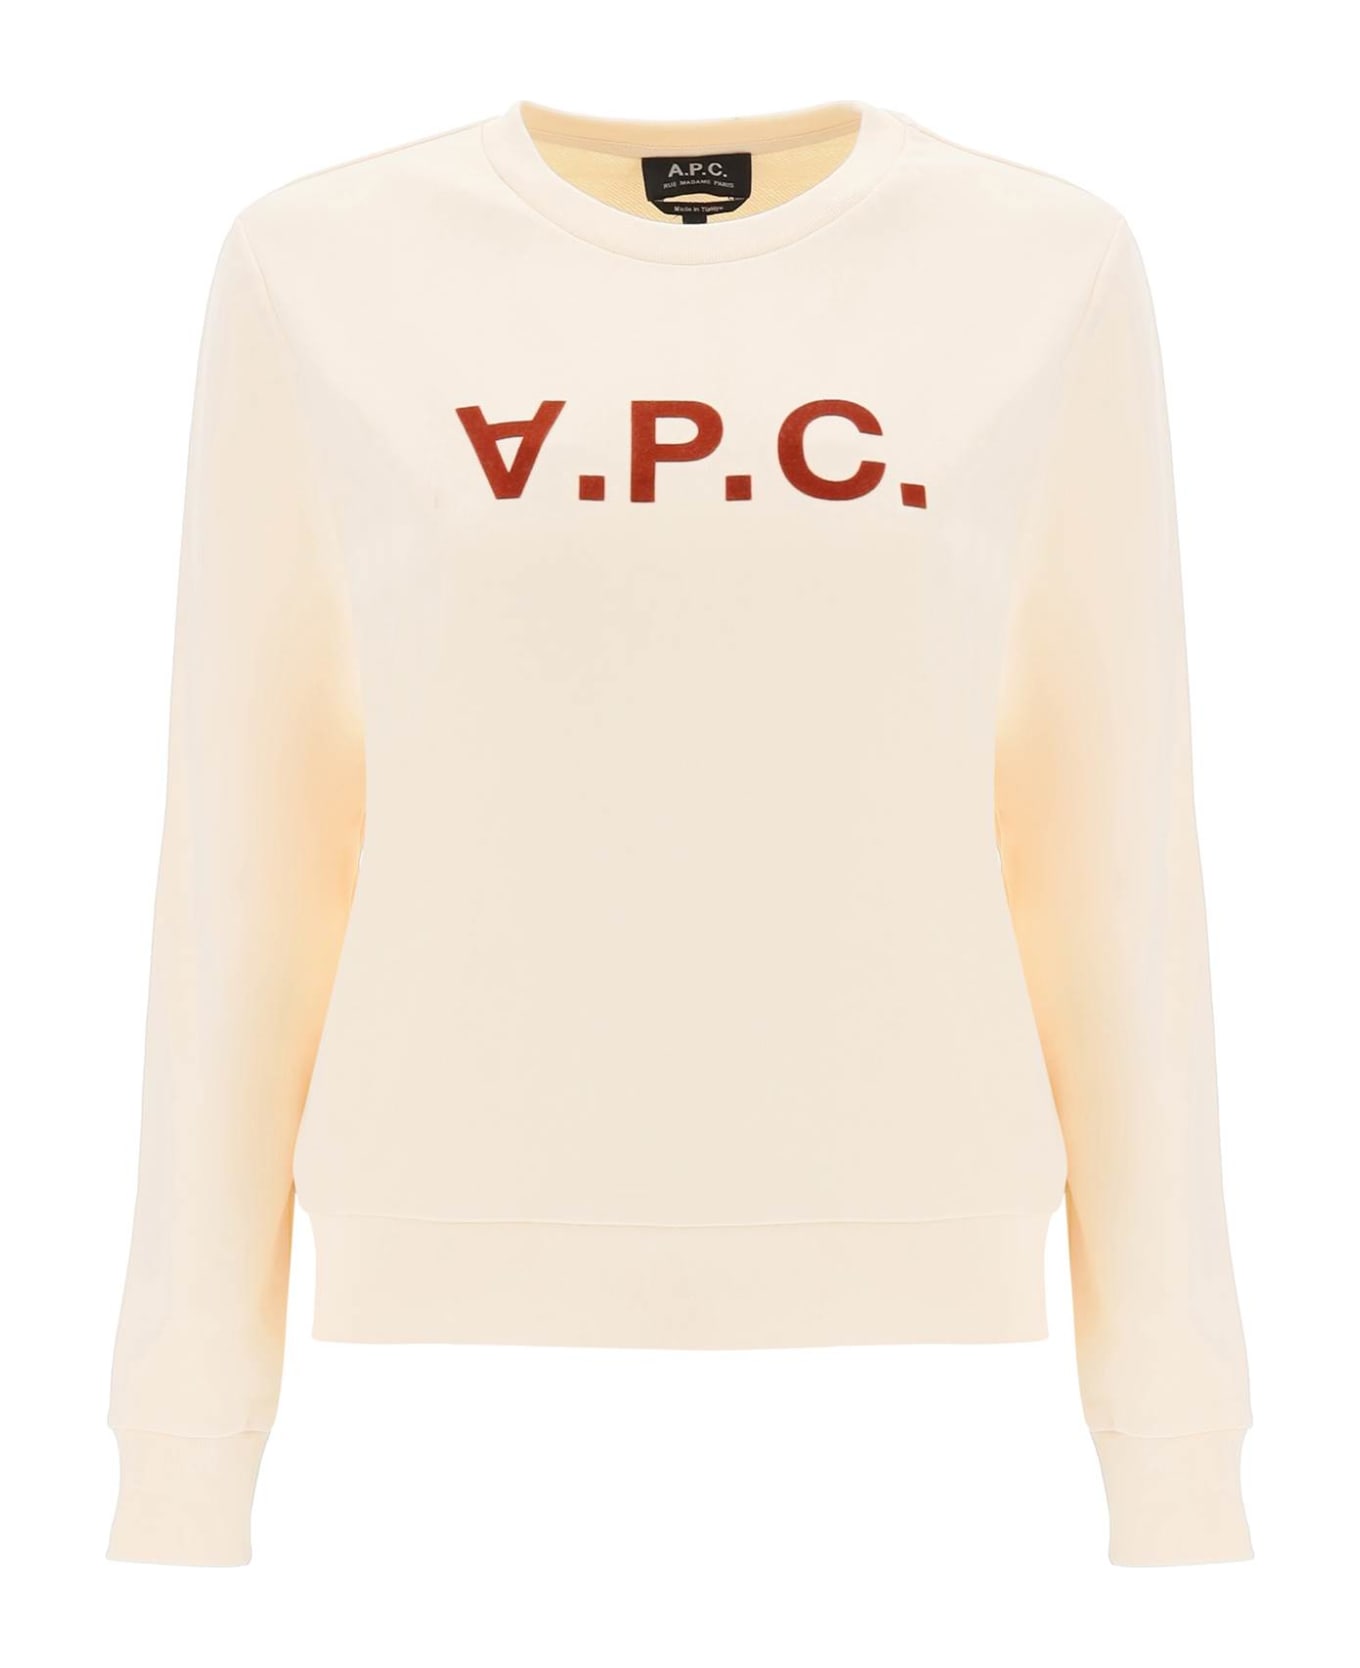 A.P.C. Viva Sweatshirt - panna